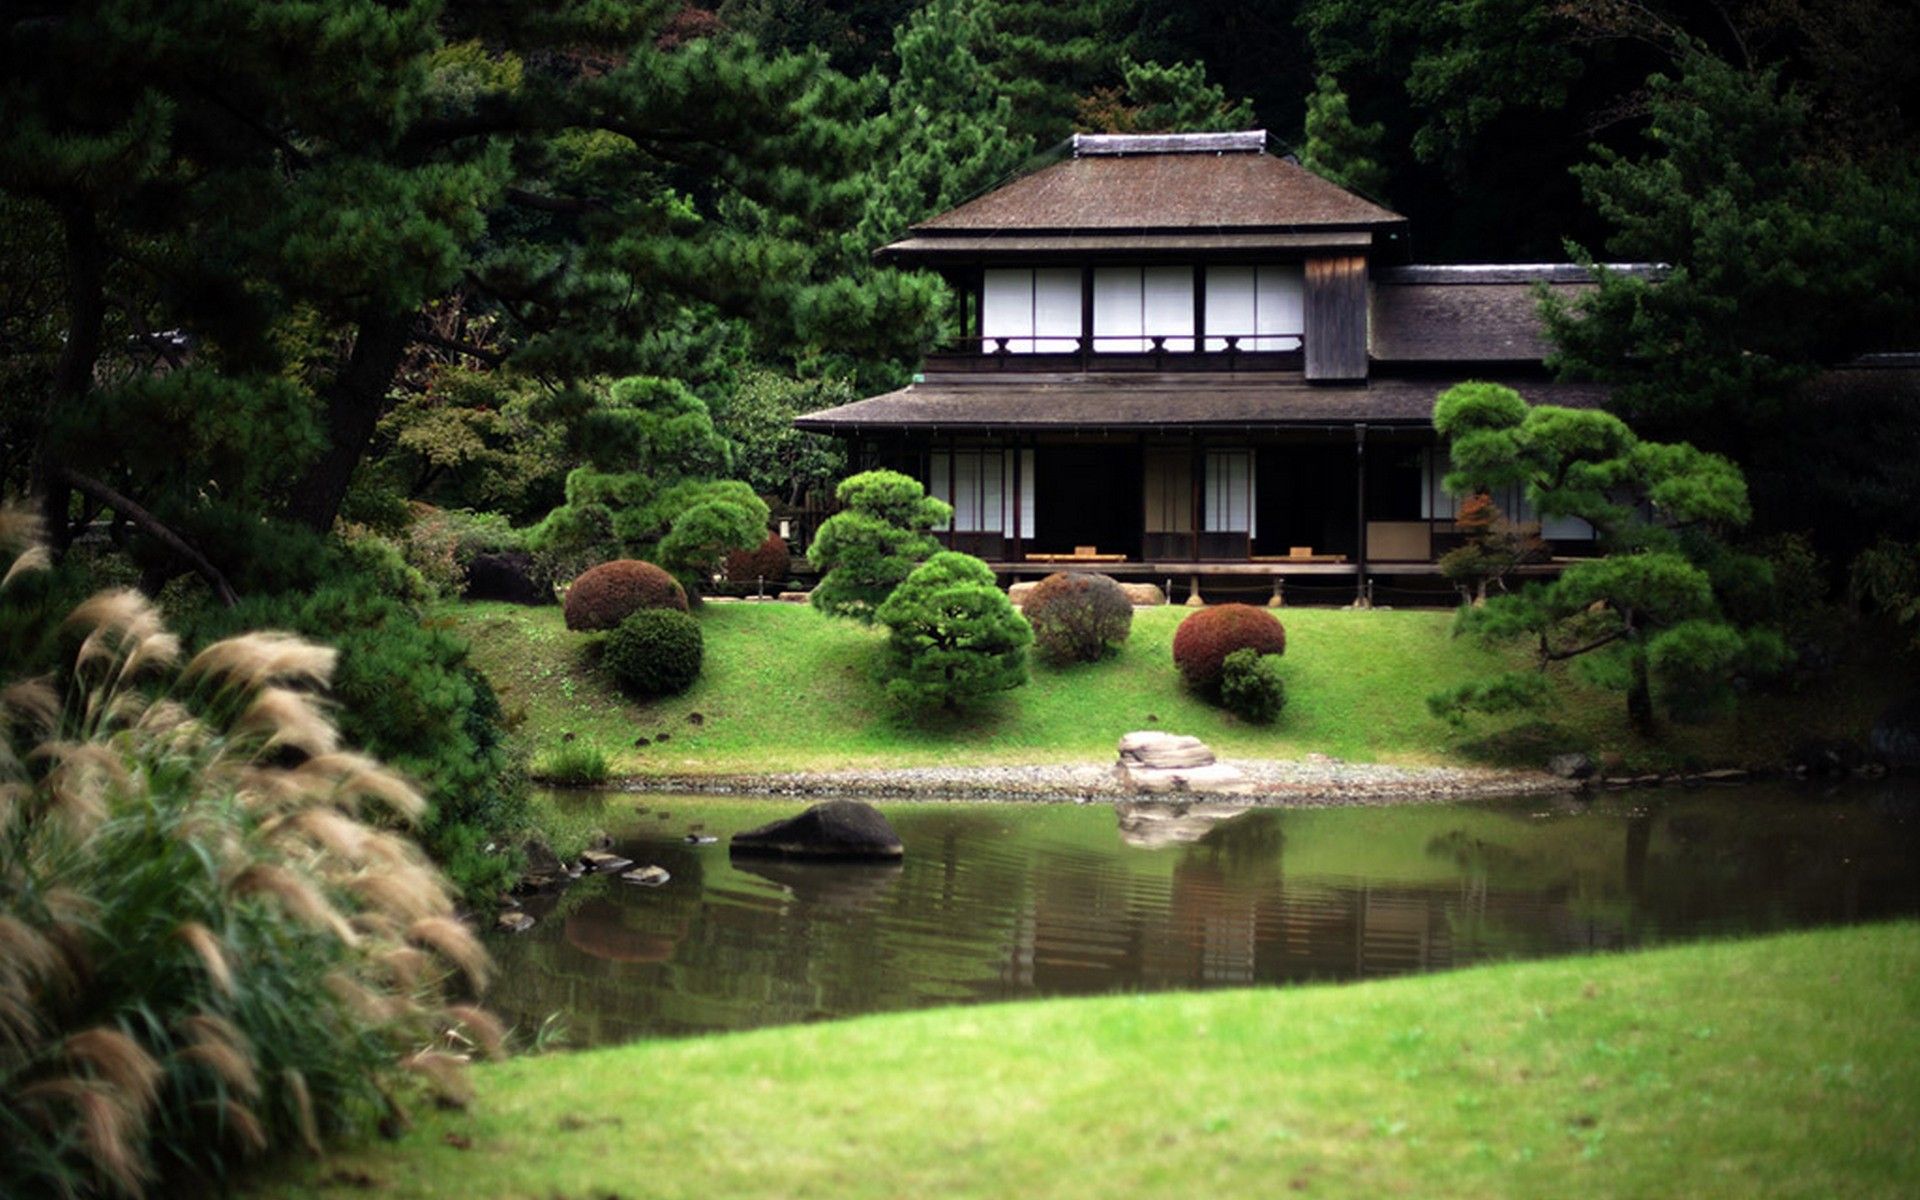 Japan, flowers, houses, spring, pond, Japanese gardens, streams